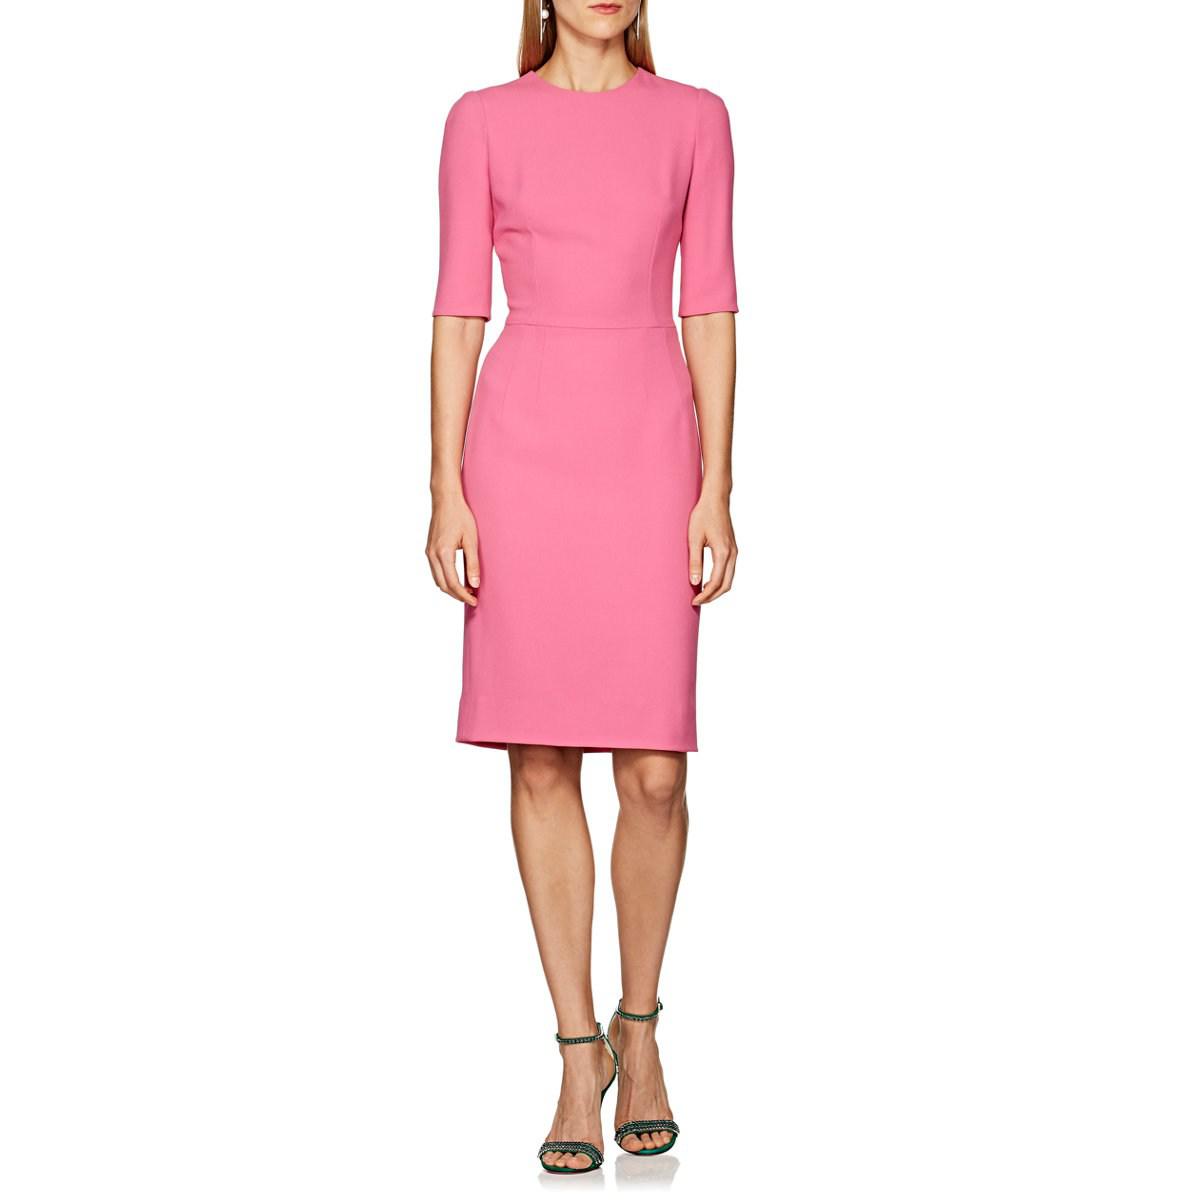 Dolce & Gabbana Cady Sheath Dress in Pink - Lyst